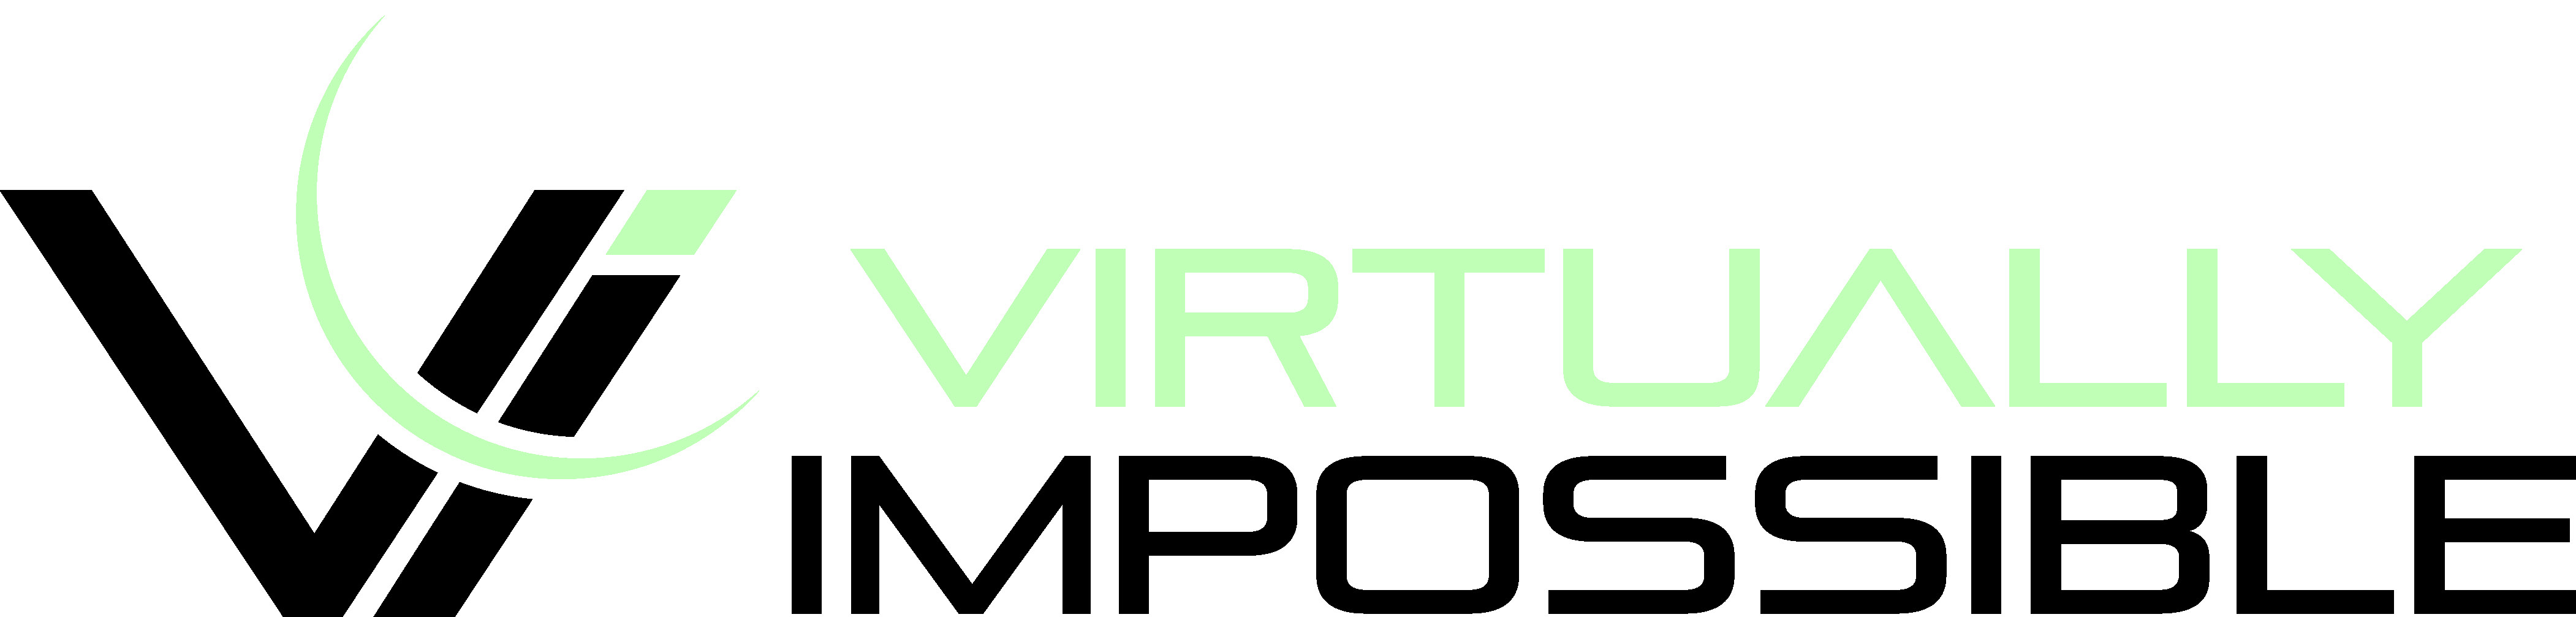 Virtually Impossible Logo